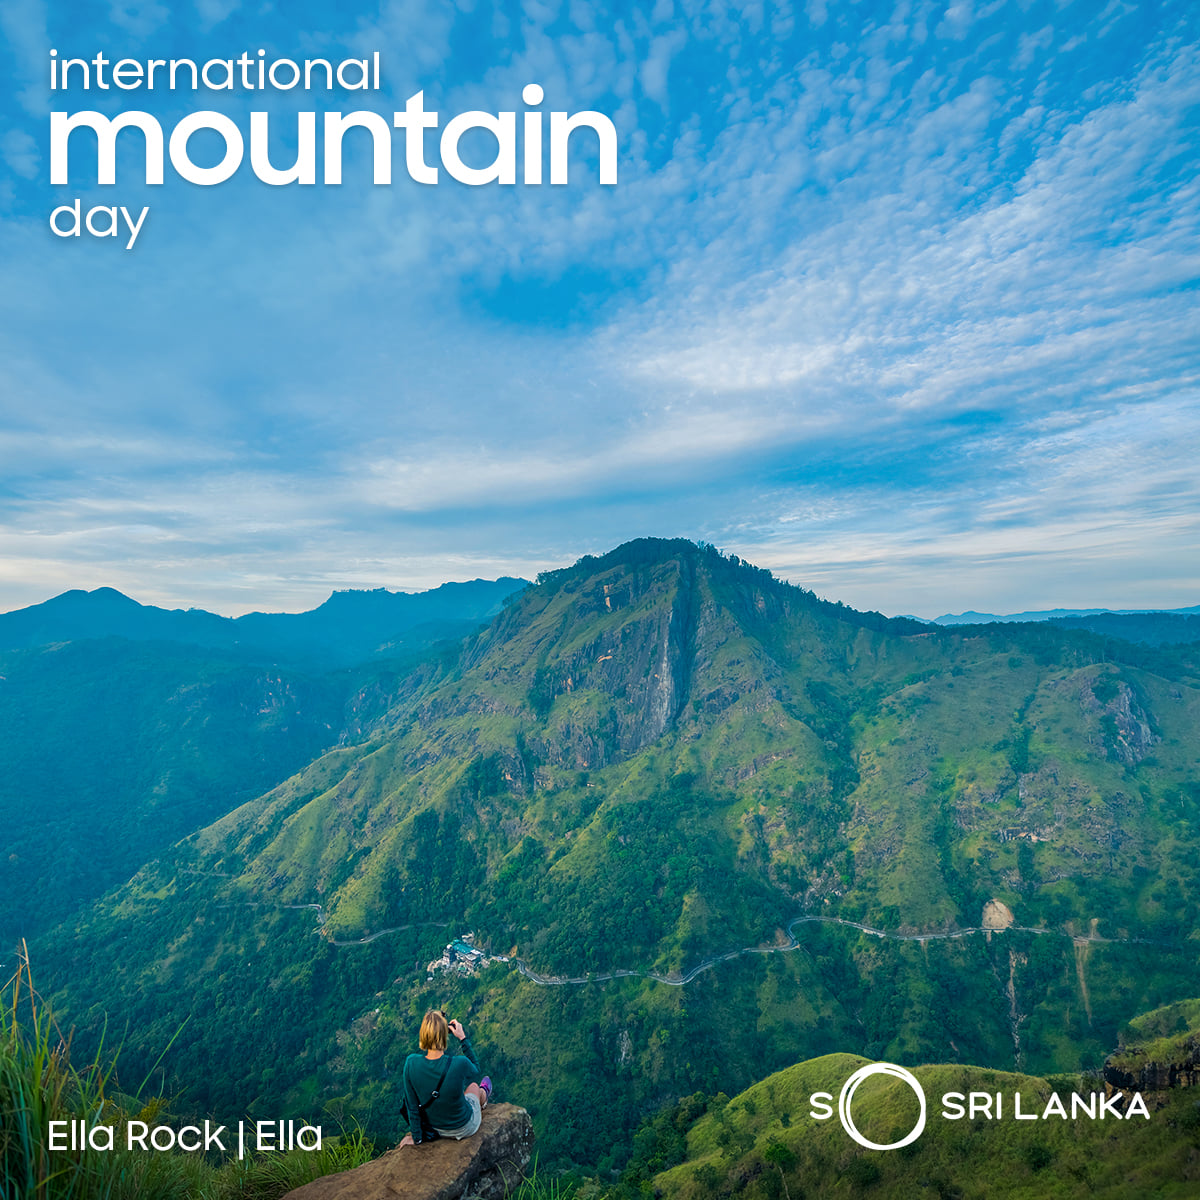 11 December is International Mountain Day!